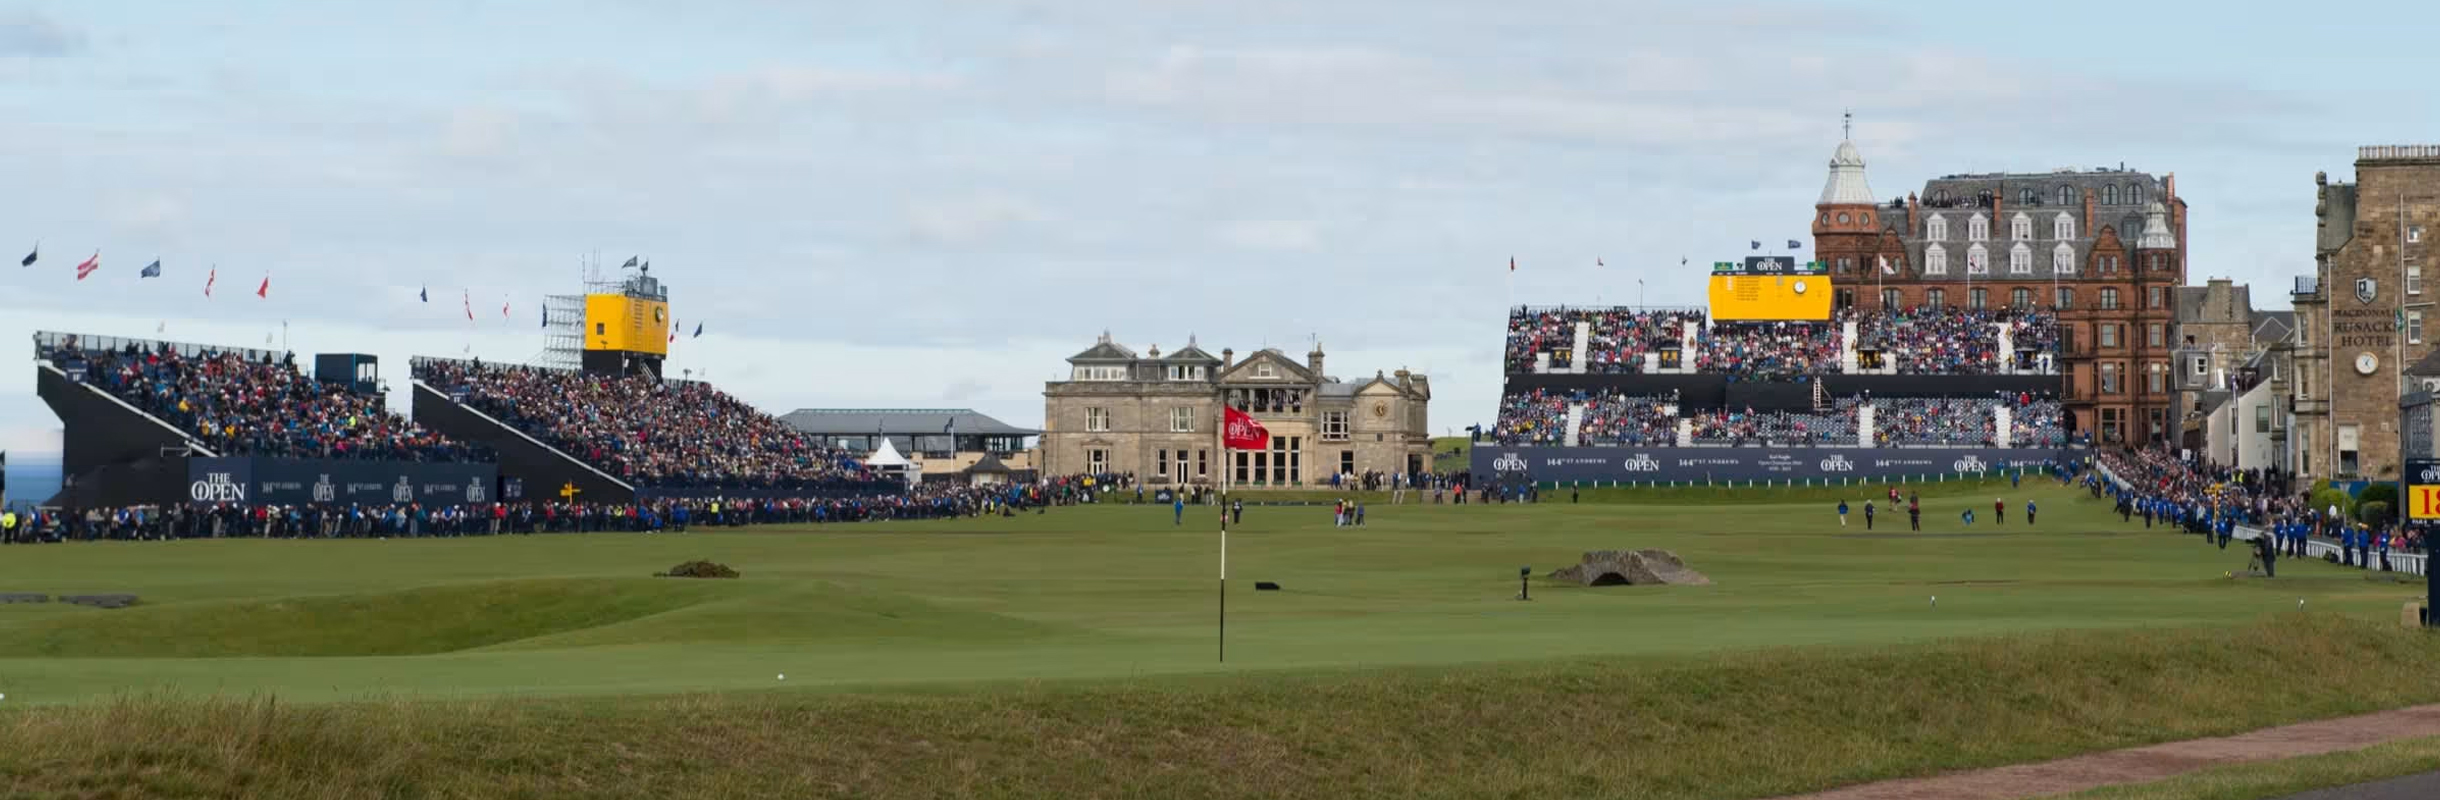 Rolex & The Open: golf's oldest Major